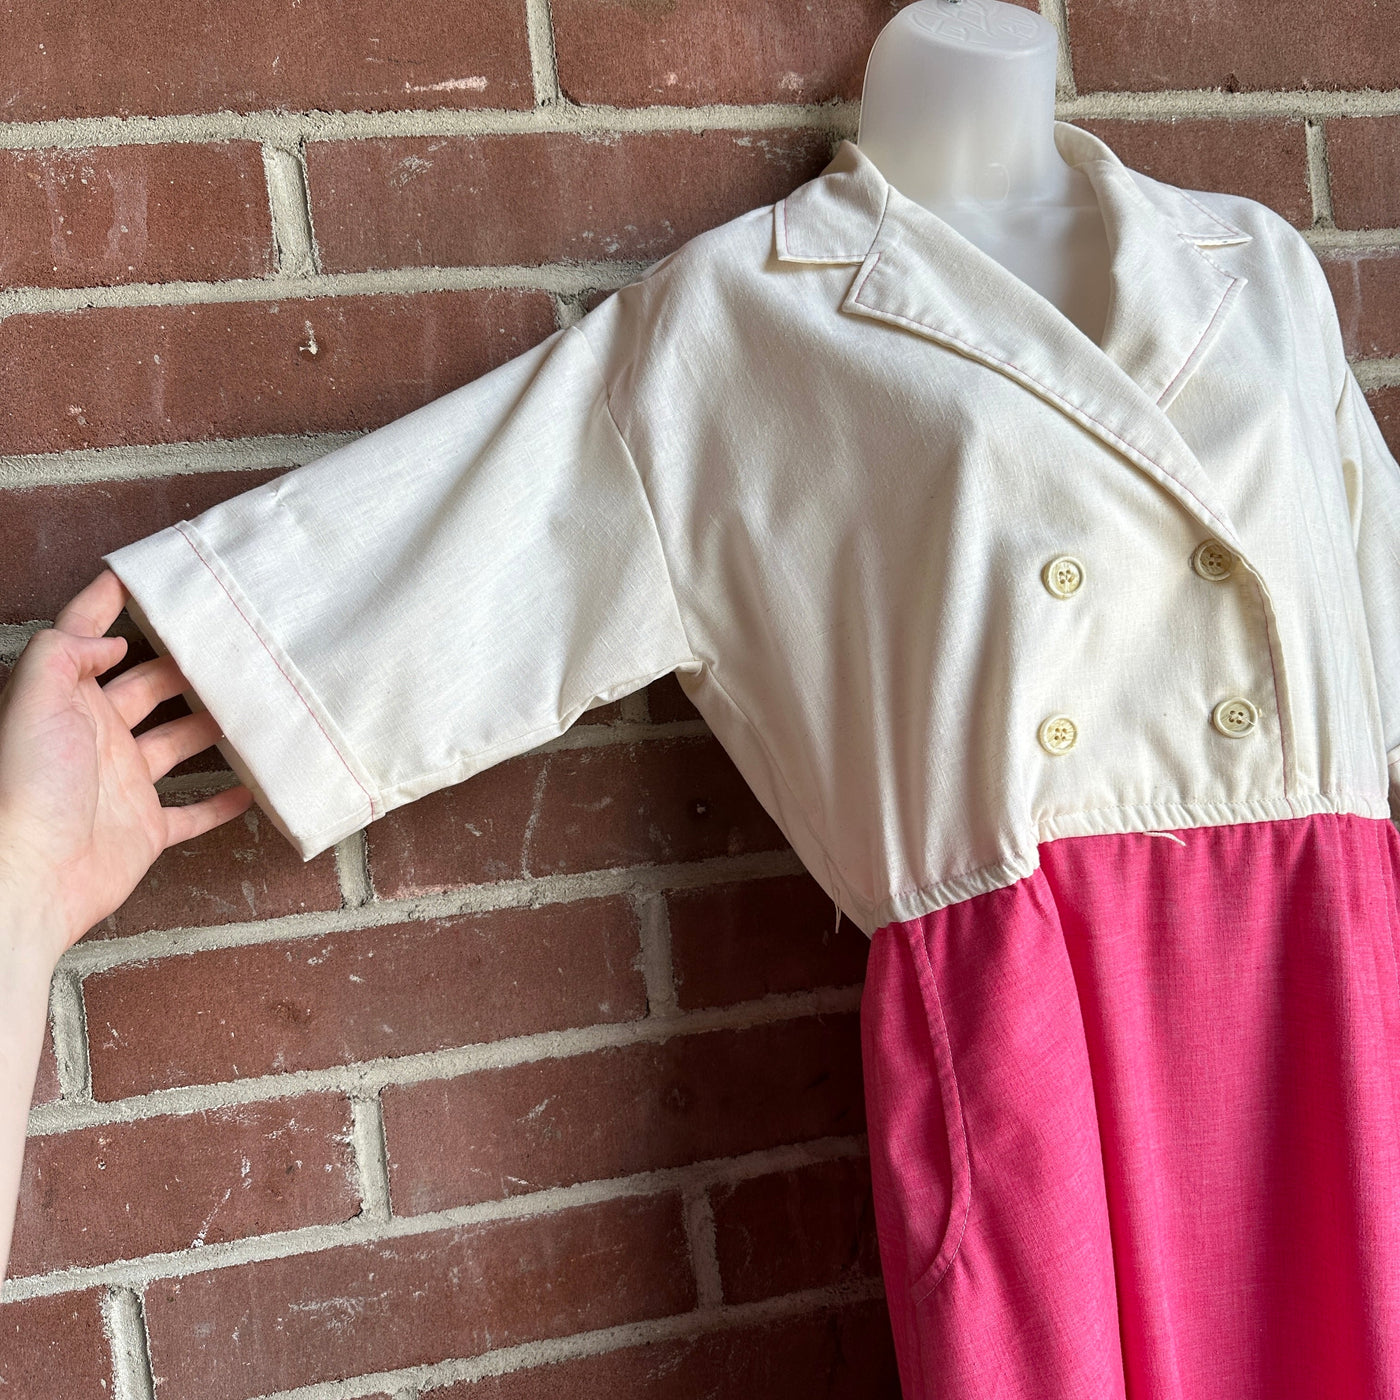 1980s Vintage White/Pink Color-Block “Dovani of Dallas” Dress